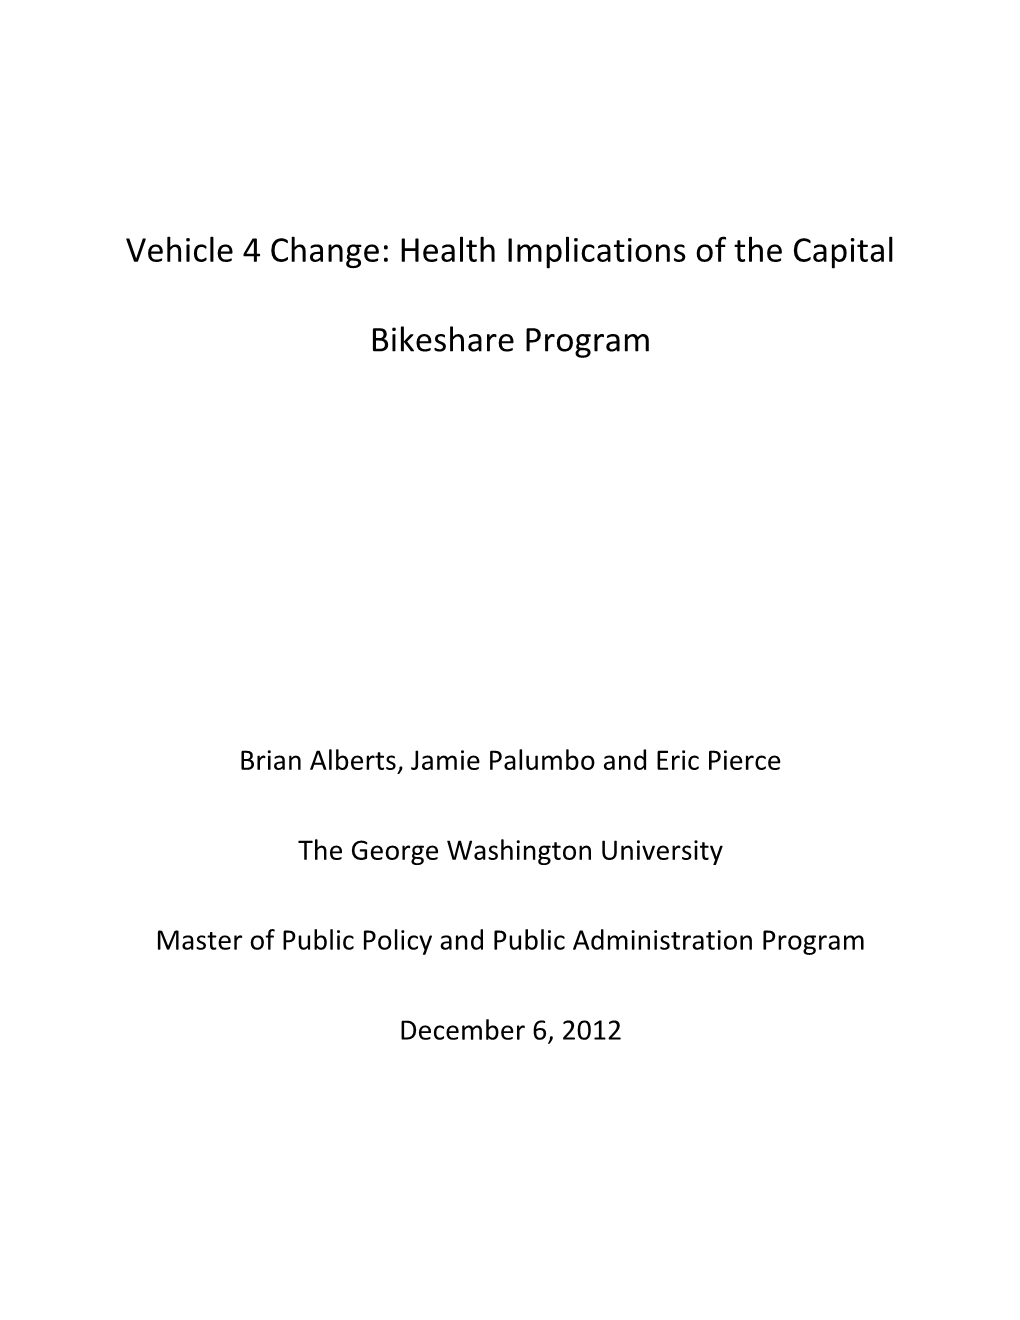 Vehicle 4 Change: Health Implications of the Capital Bikeshare Program